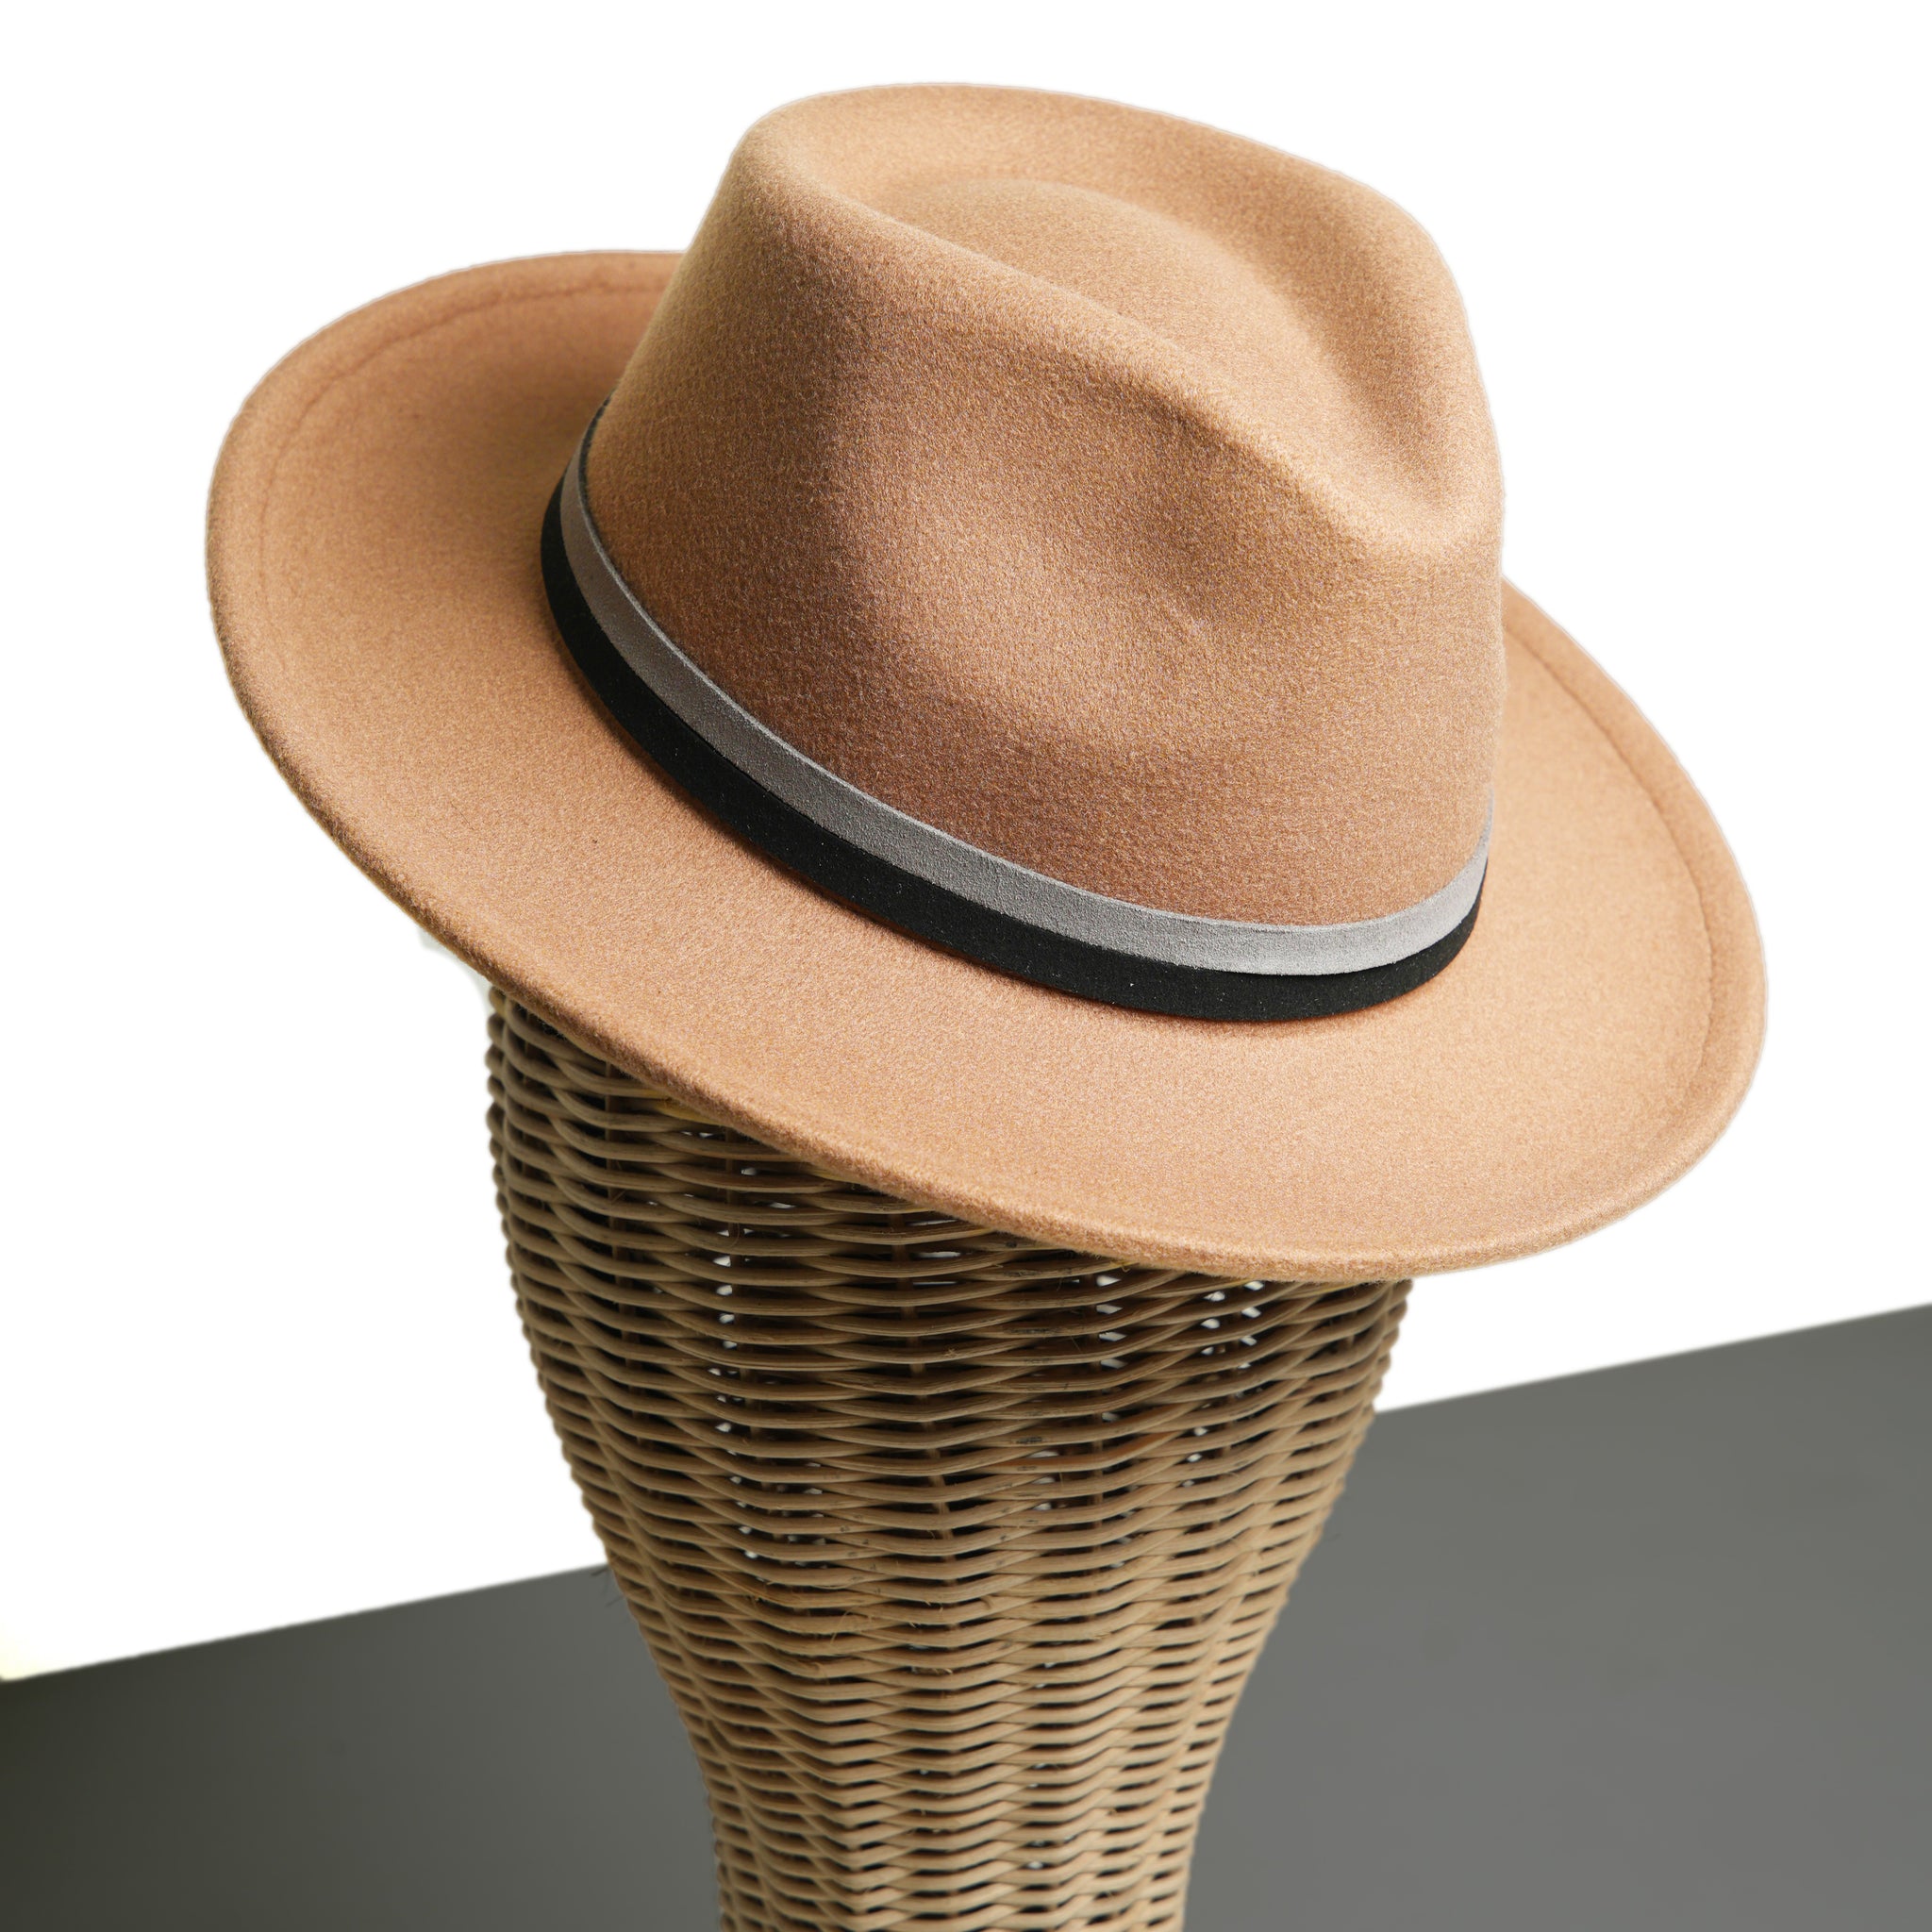 Chokore Vintage Fedora Hat (Light Brown)